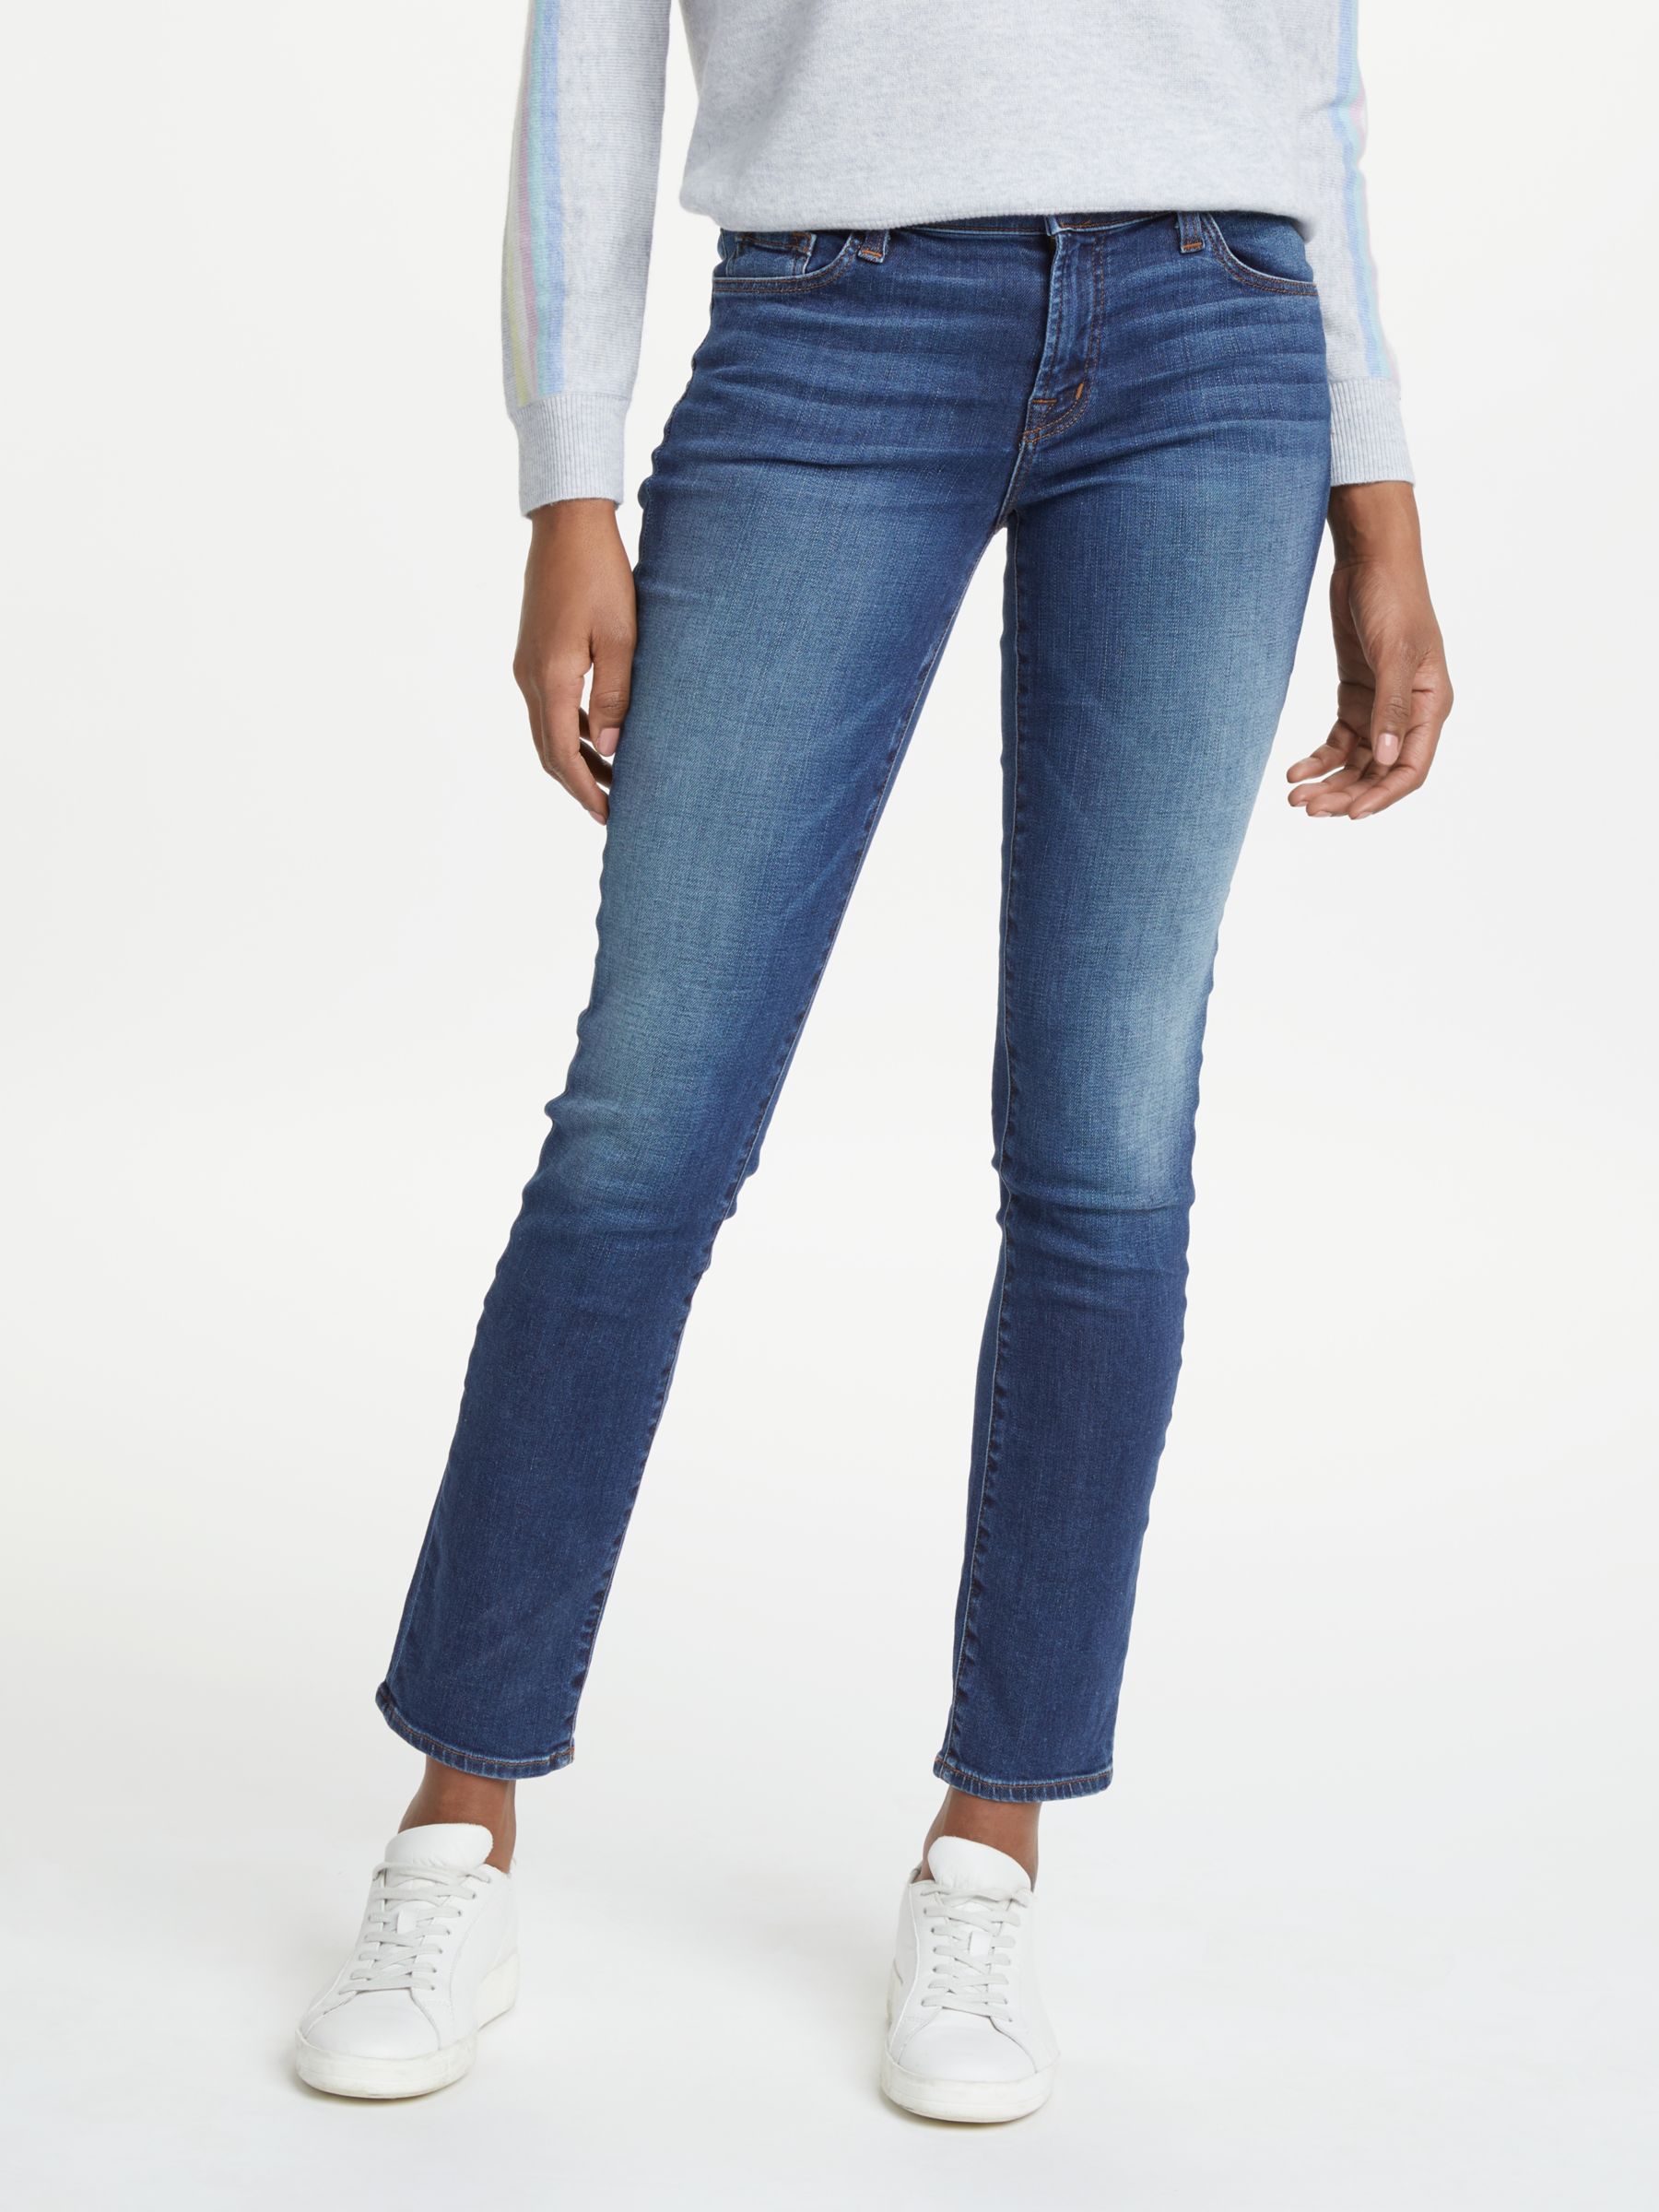 vanity jeans online